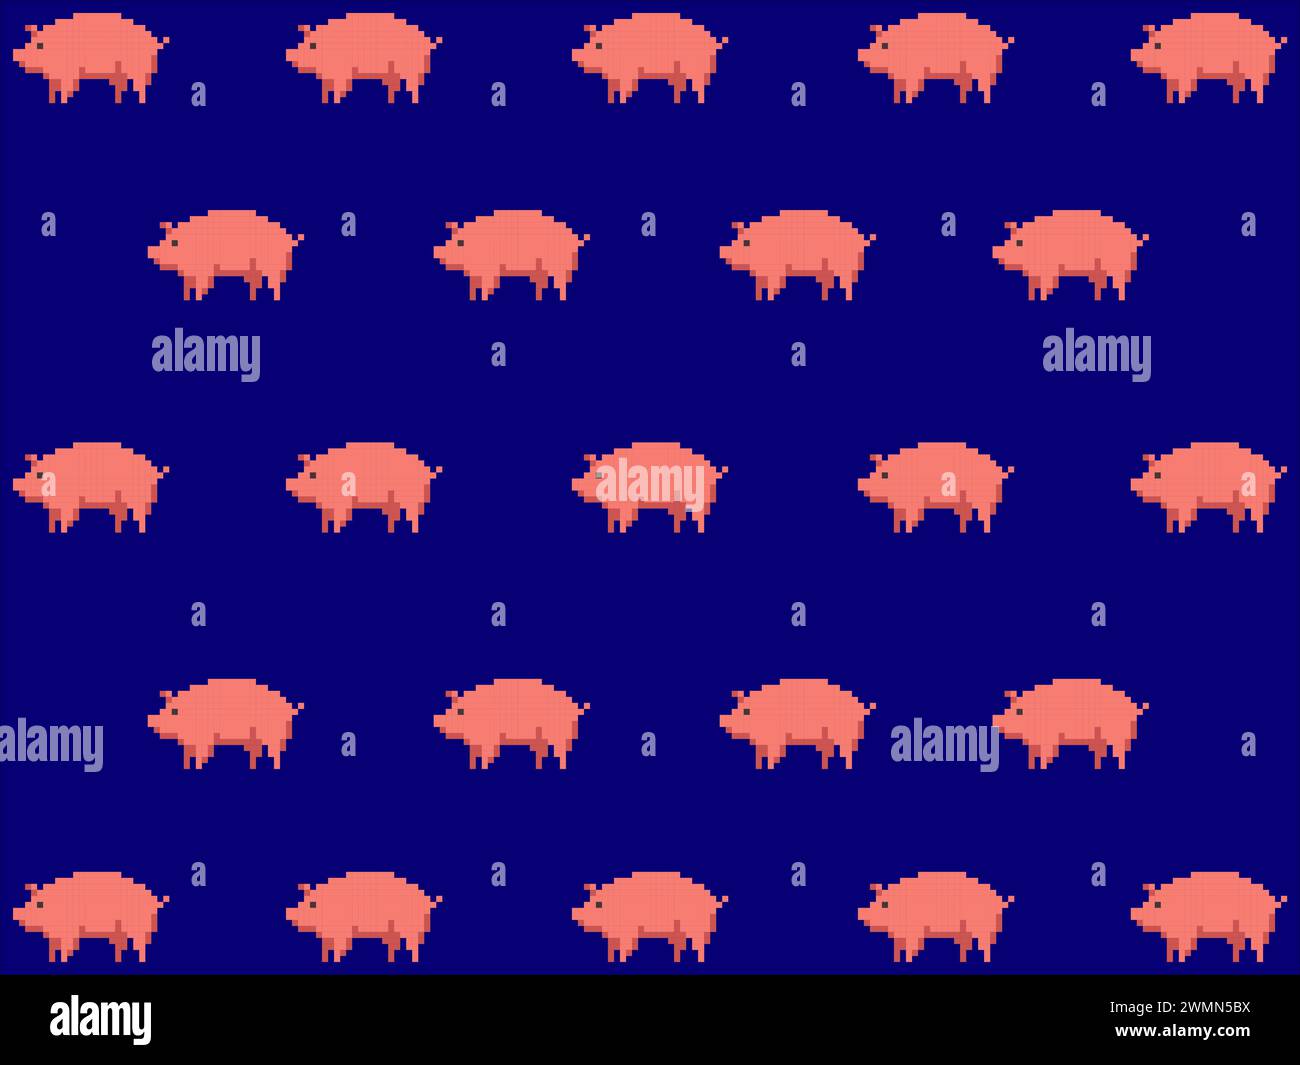 art illustration draw artwork background pixel character icon symbol design concept pattern set of pig animal Stock Vector